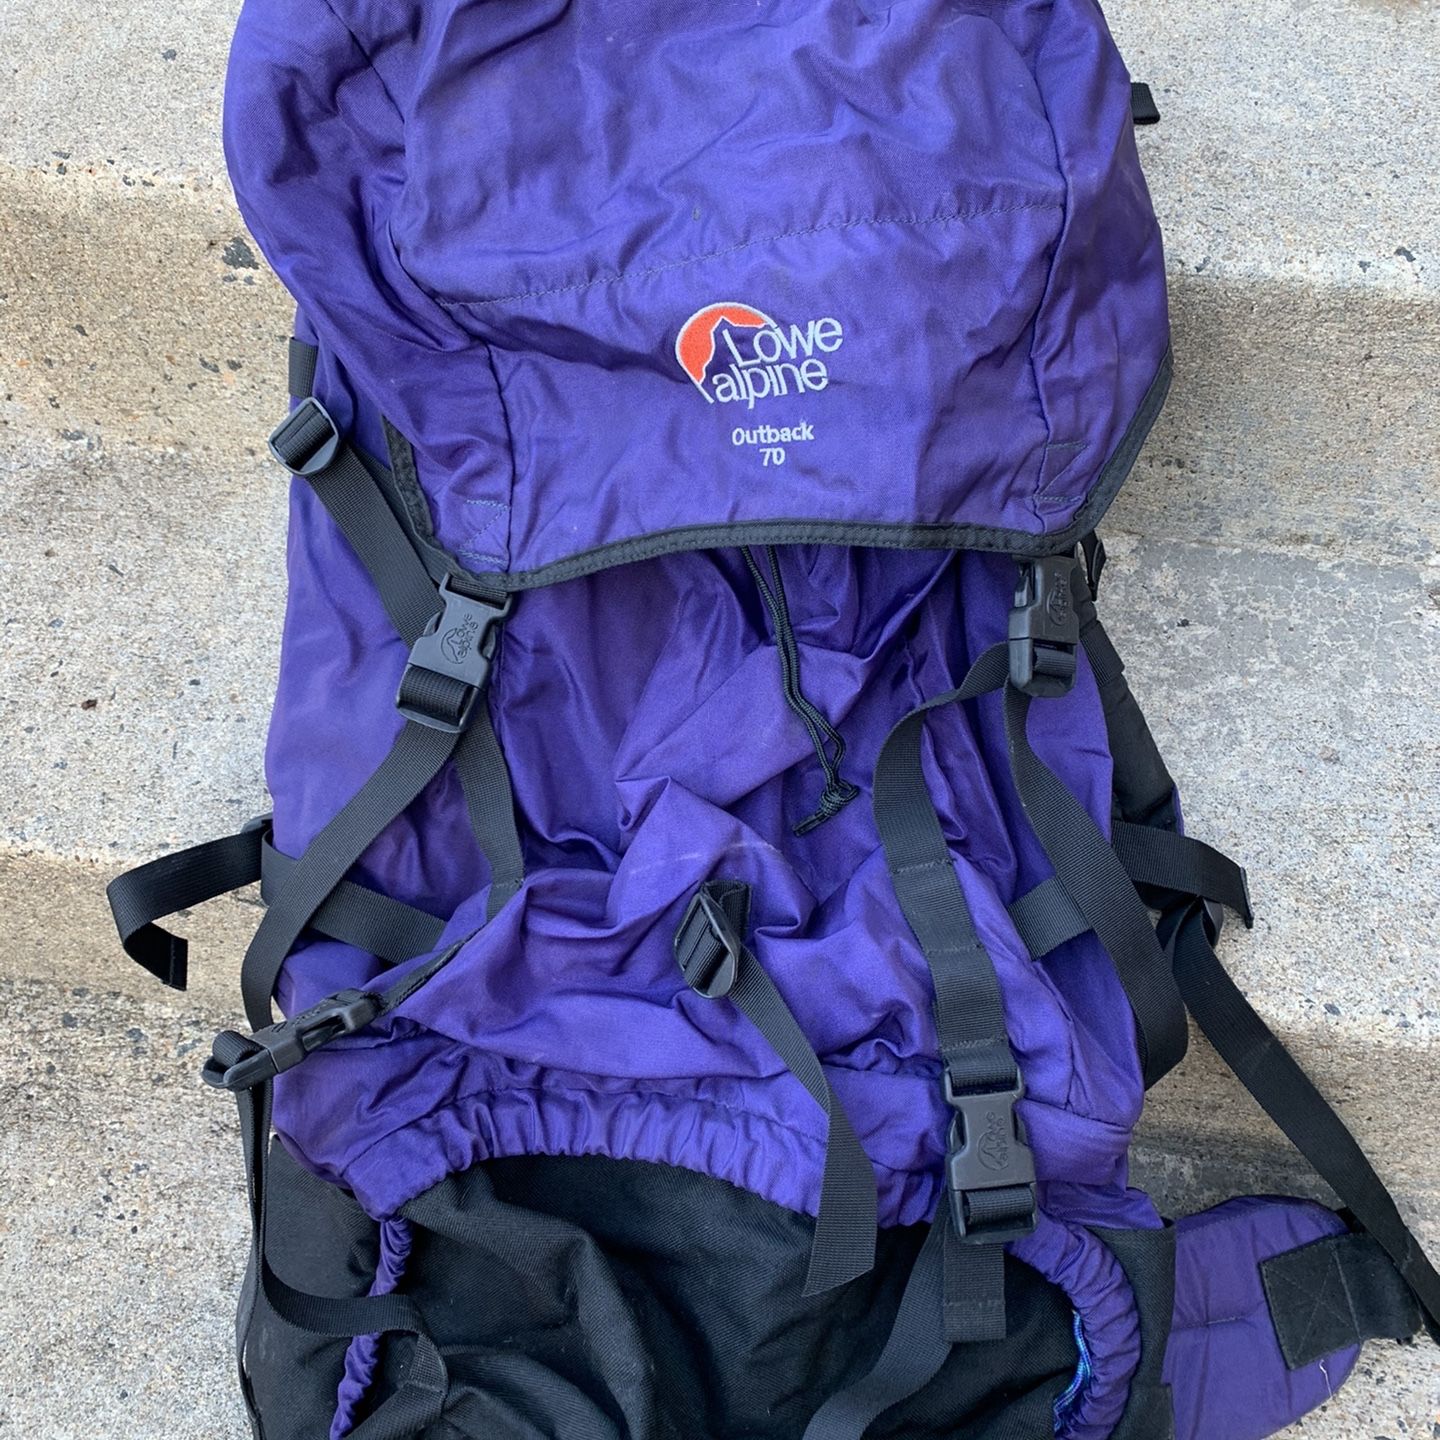 Lowe Alpine - Outback 70 Internal Frame Backpack